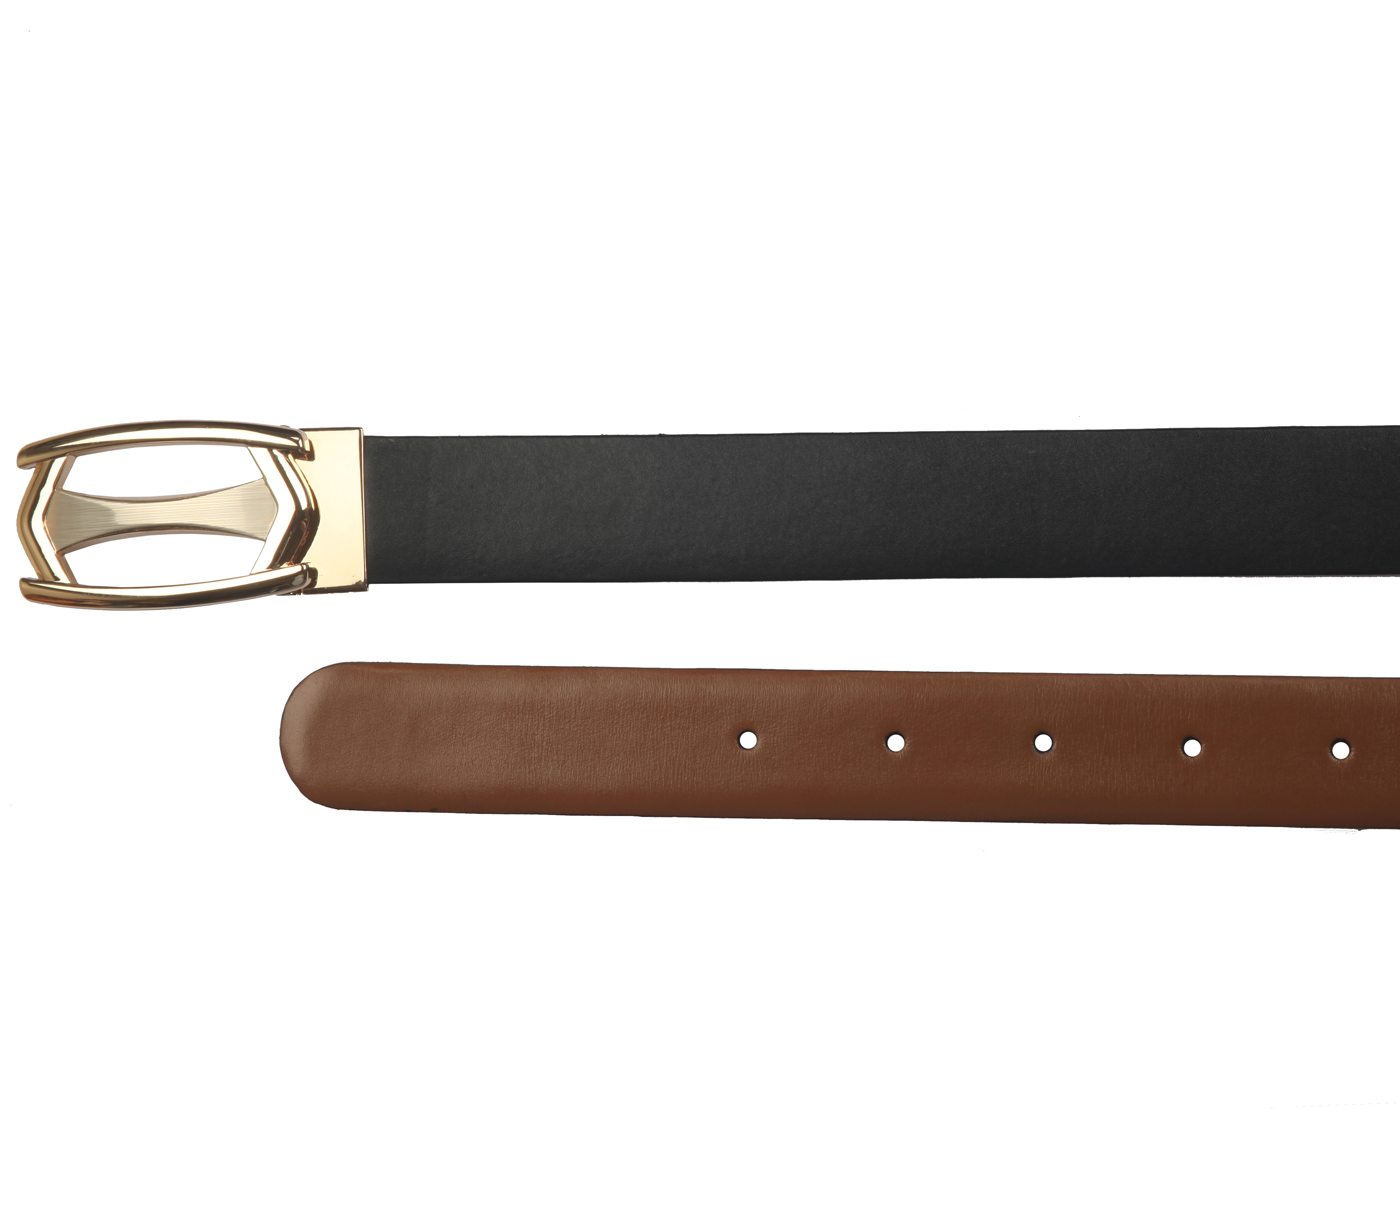 BL137--Men's reversible belt in Genuine Leather - Black/Tan